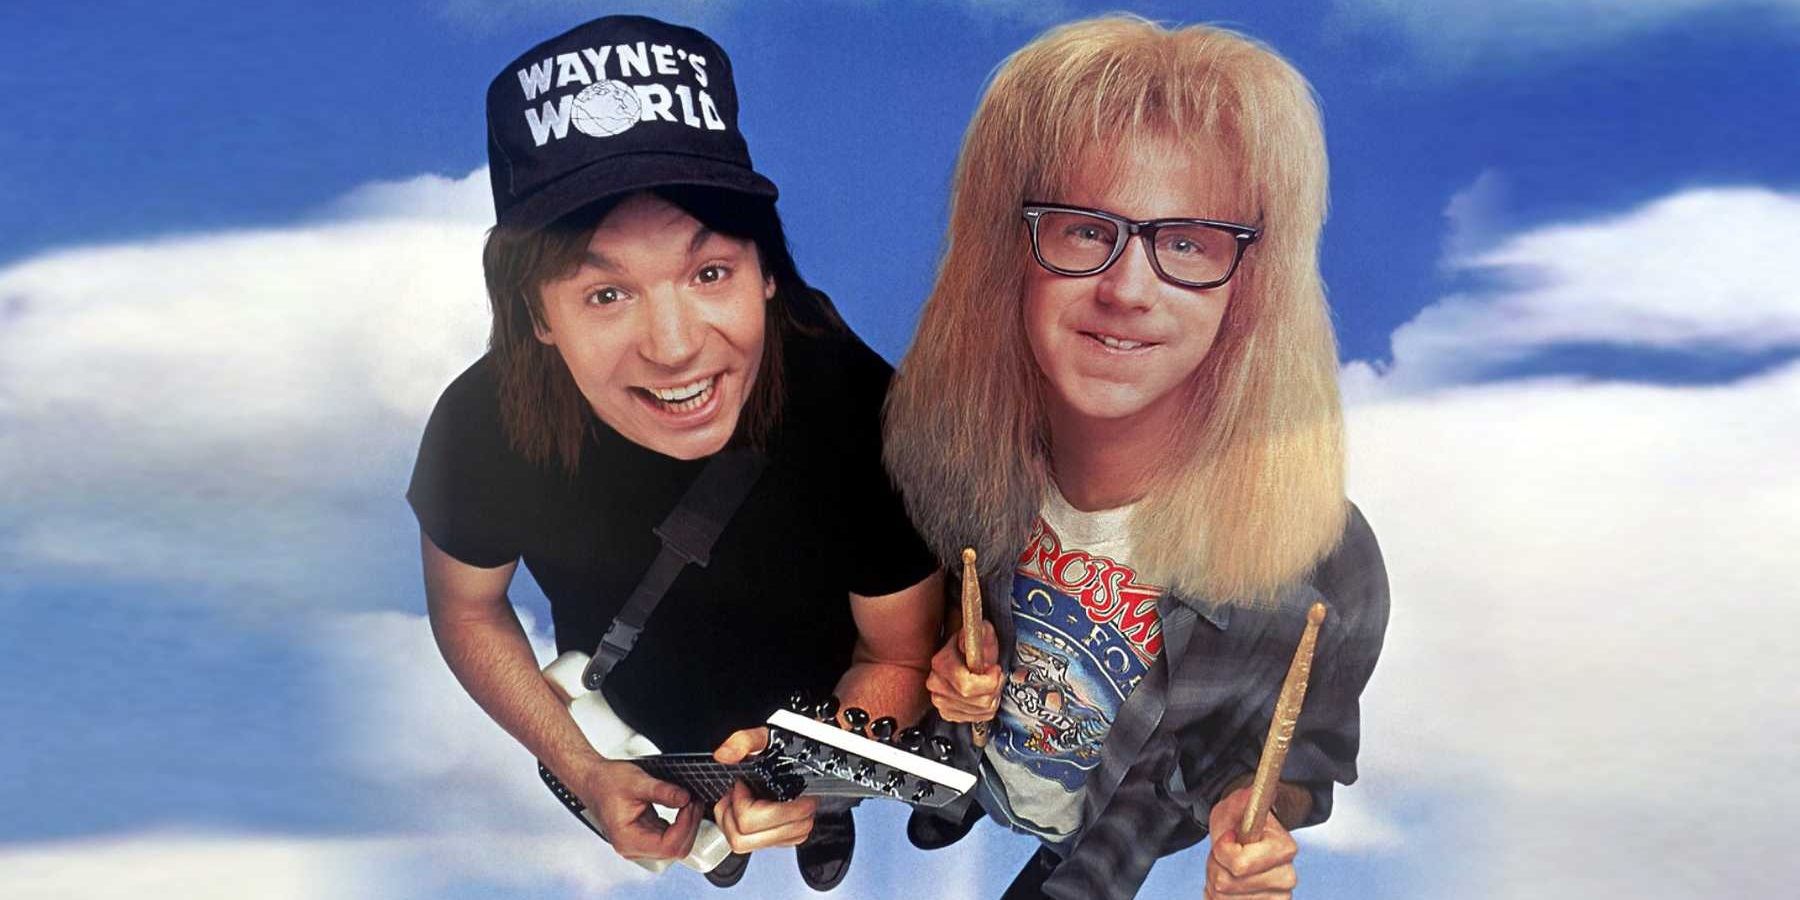 Poster for Wayne's World showing Wayne and Garth